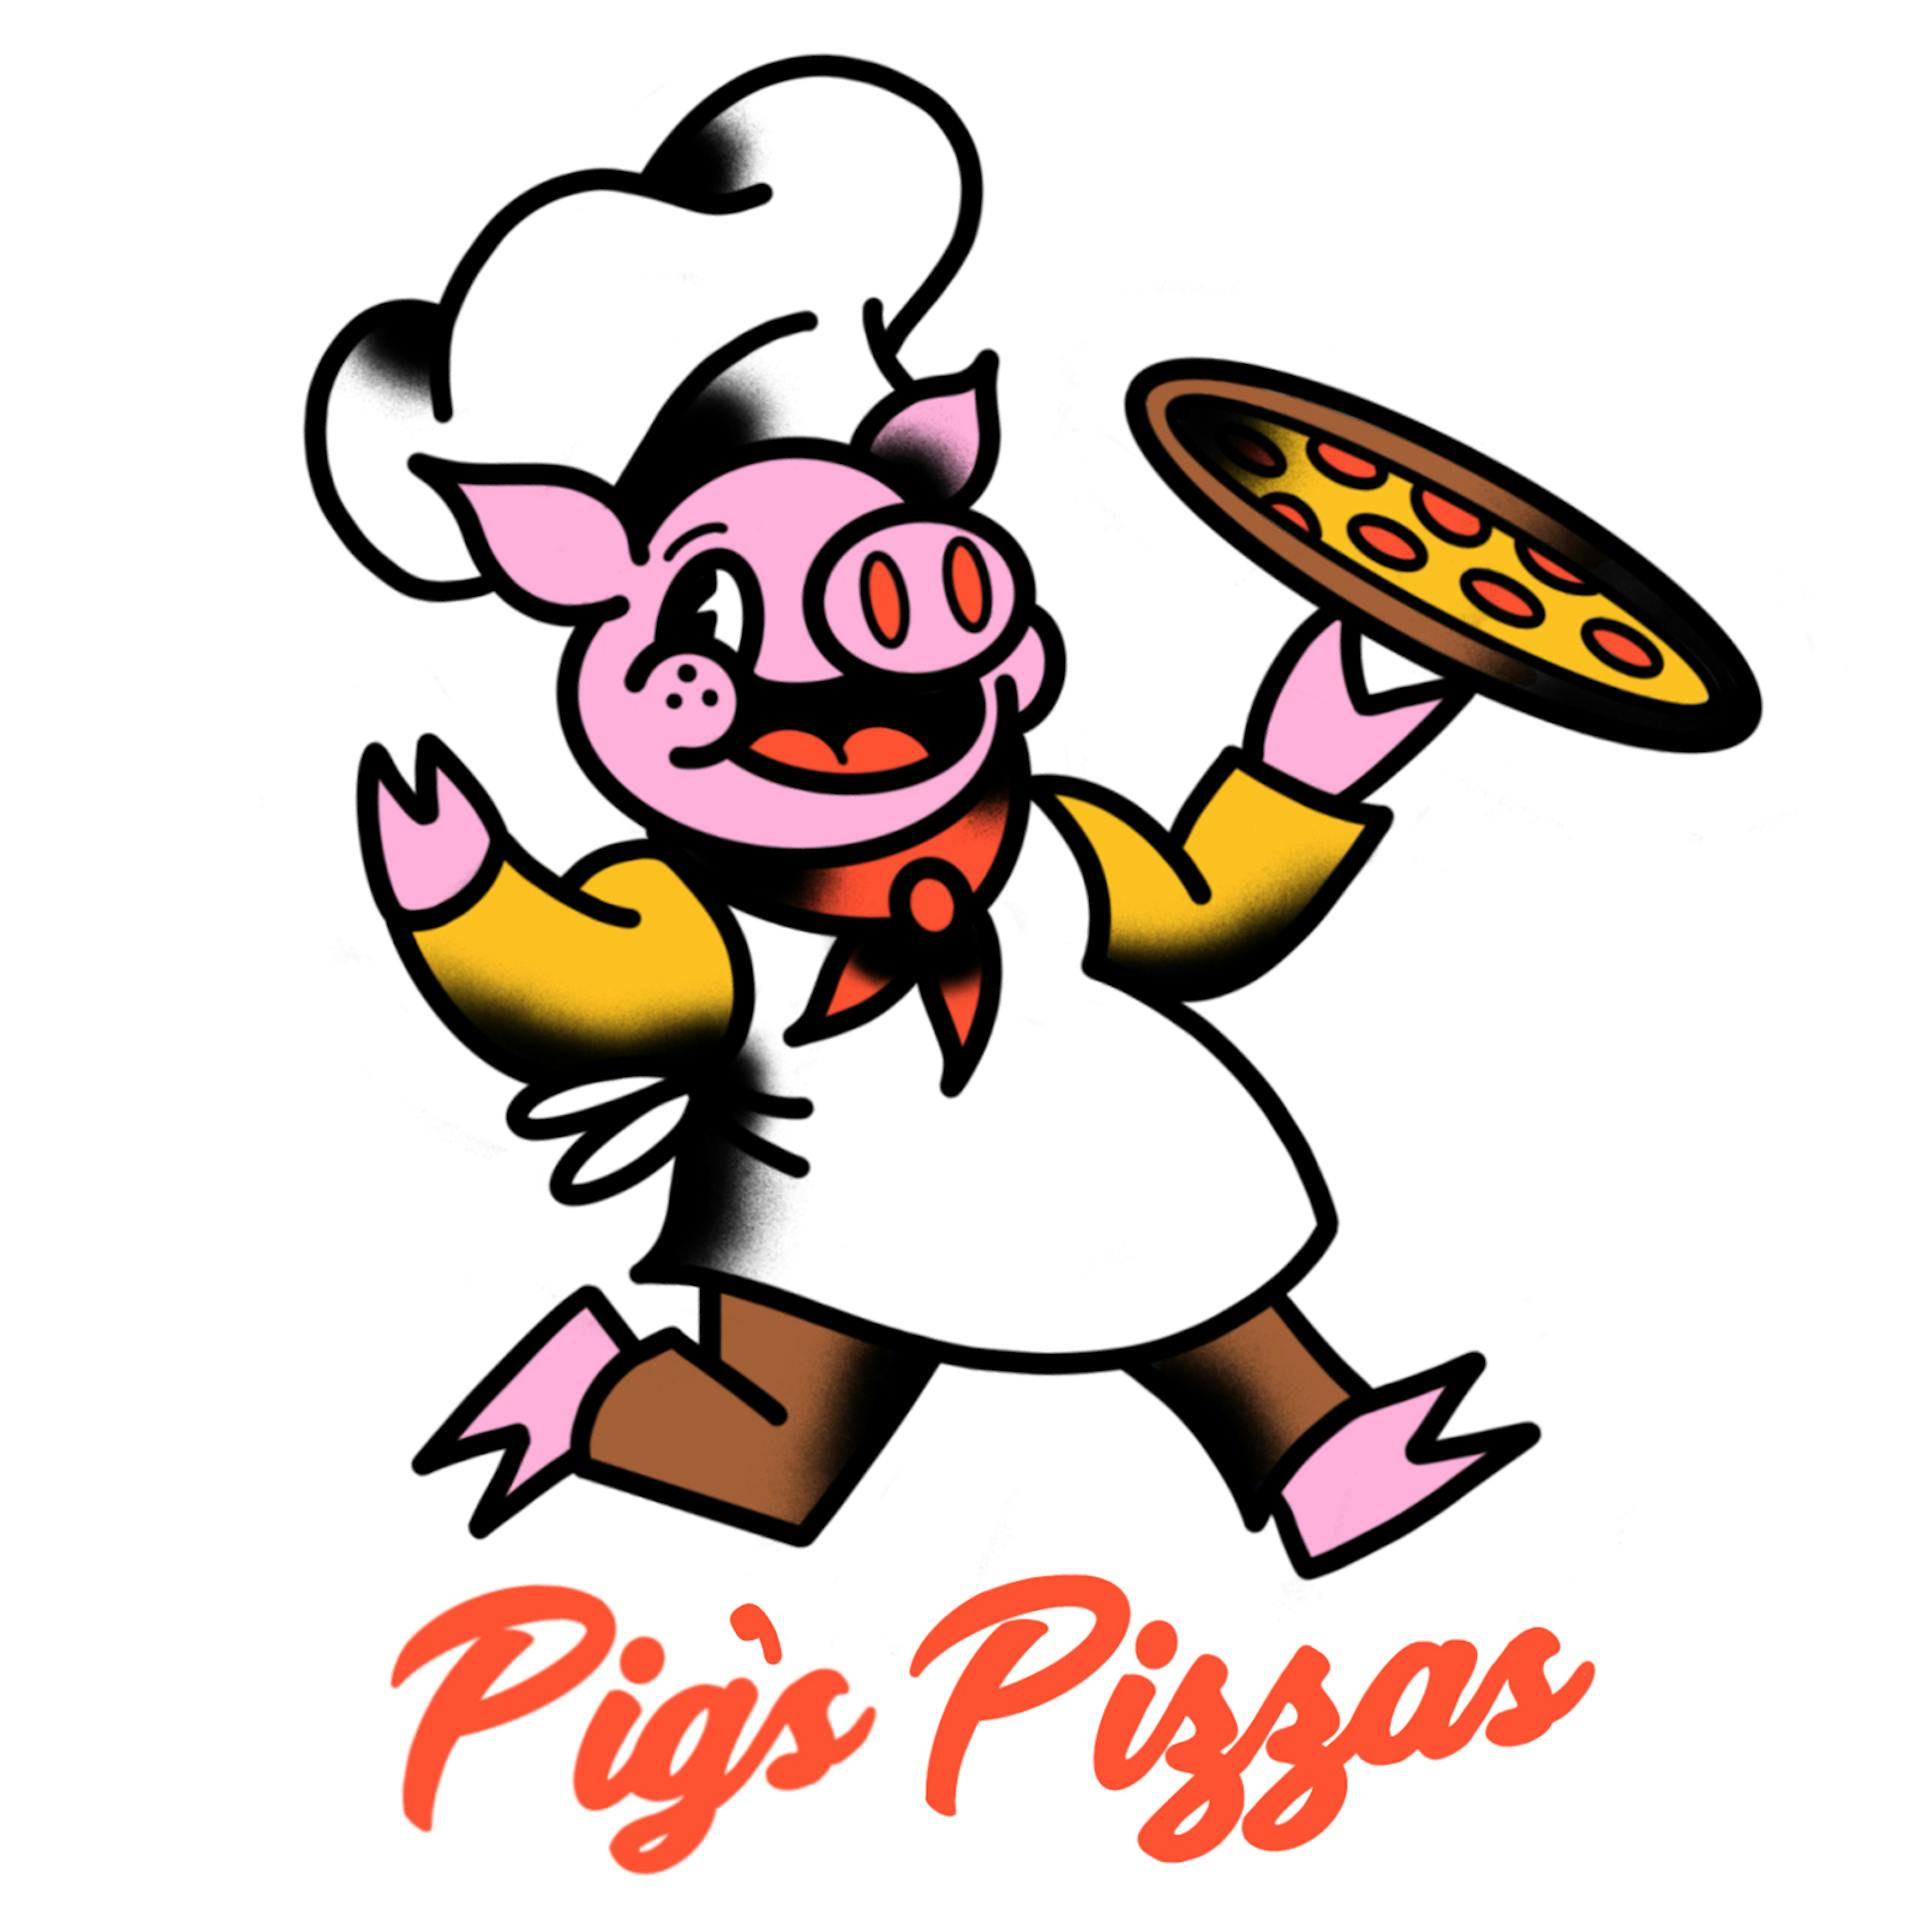 Pig’s Pizzas logo